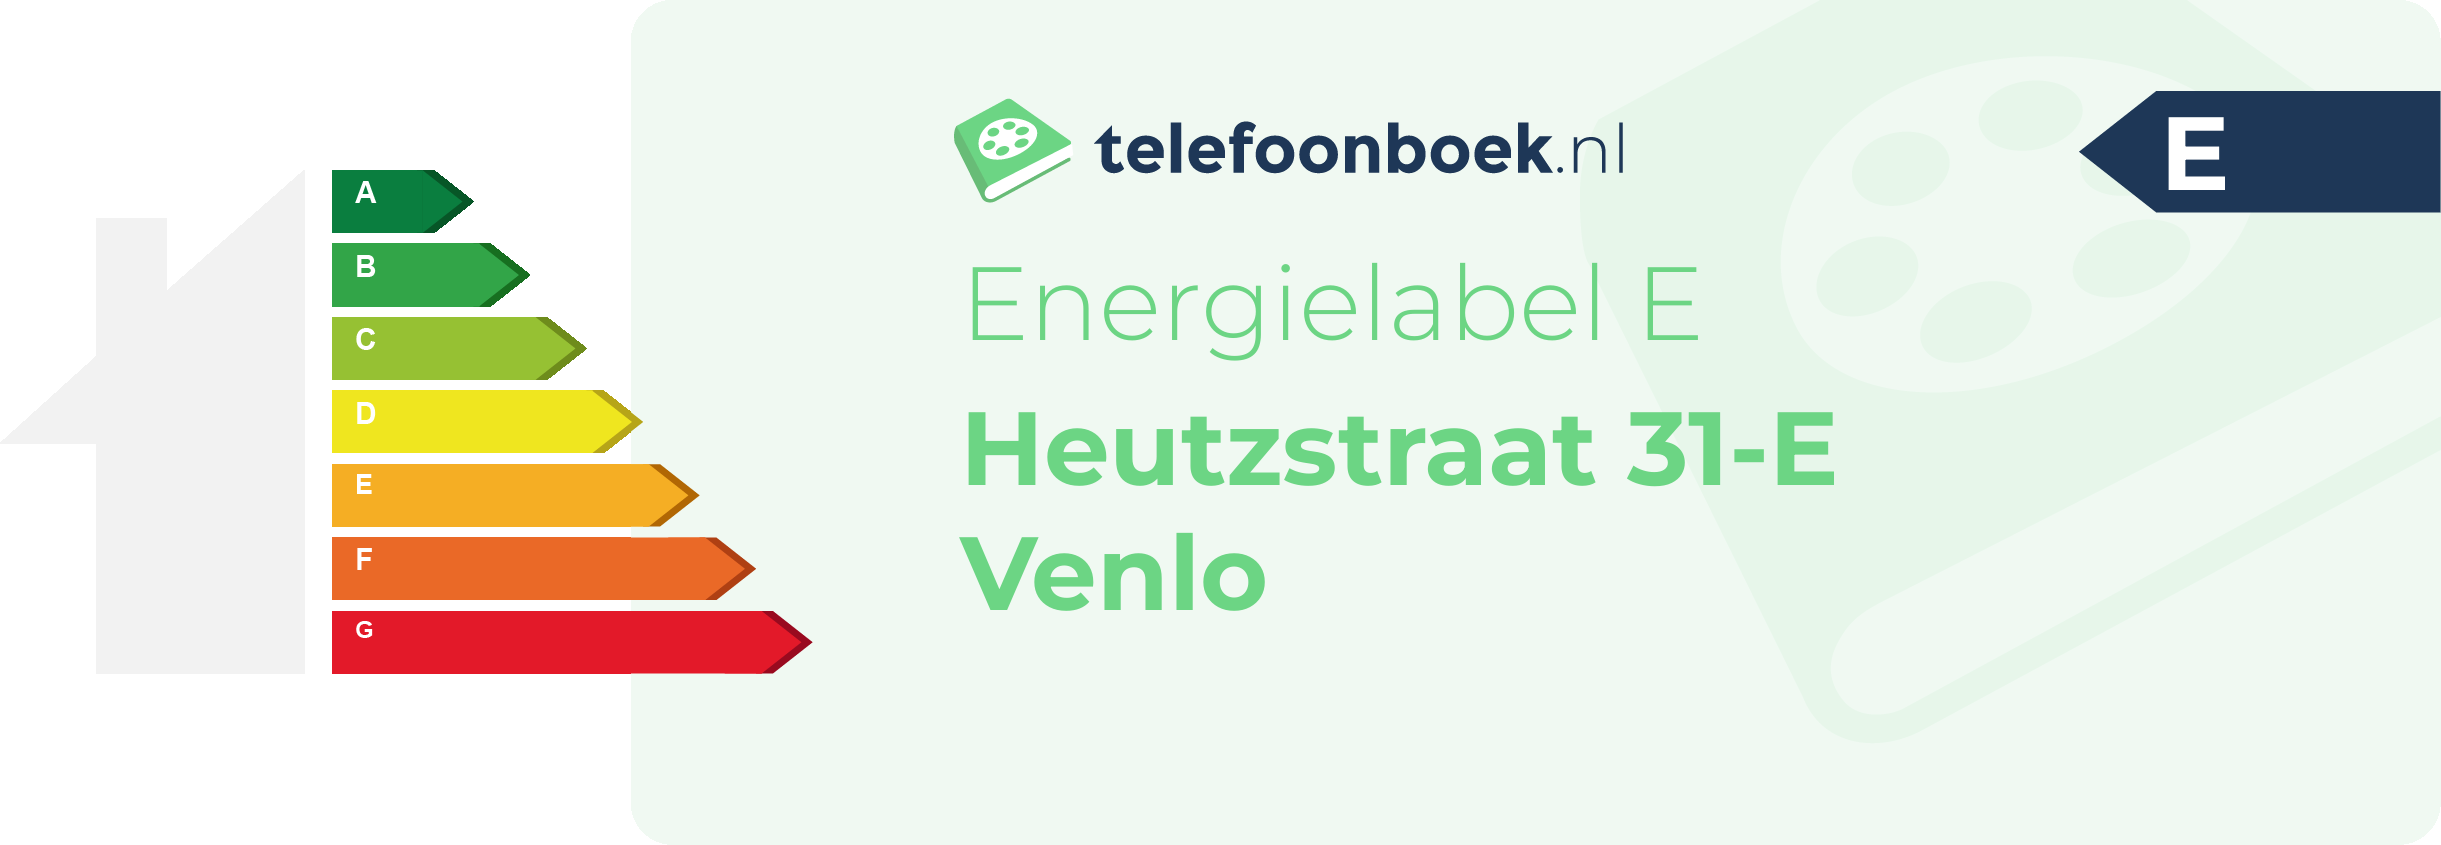 Energielabel Heutzstraat 31-E Venlo